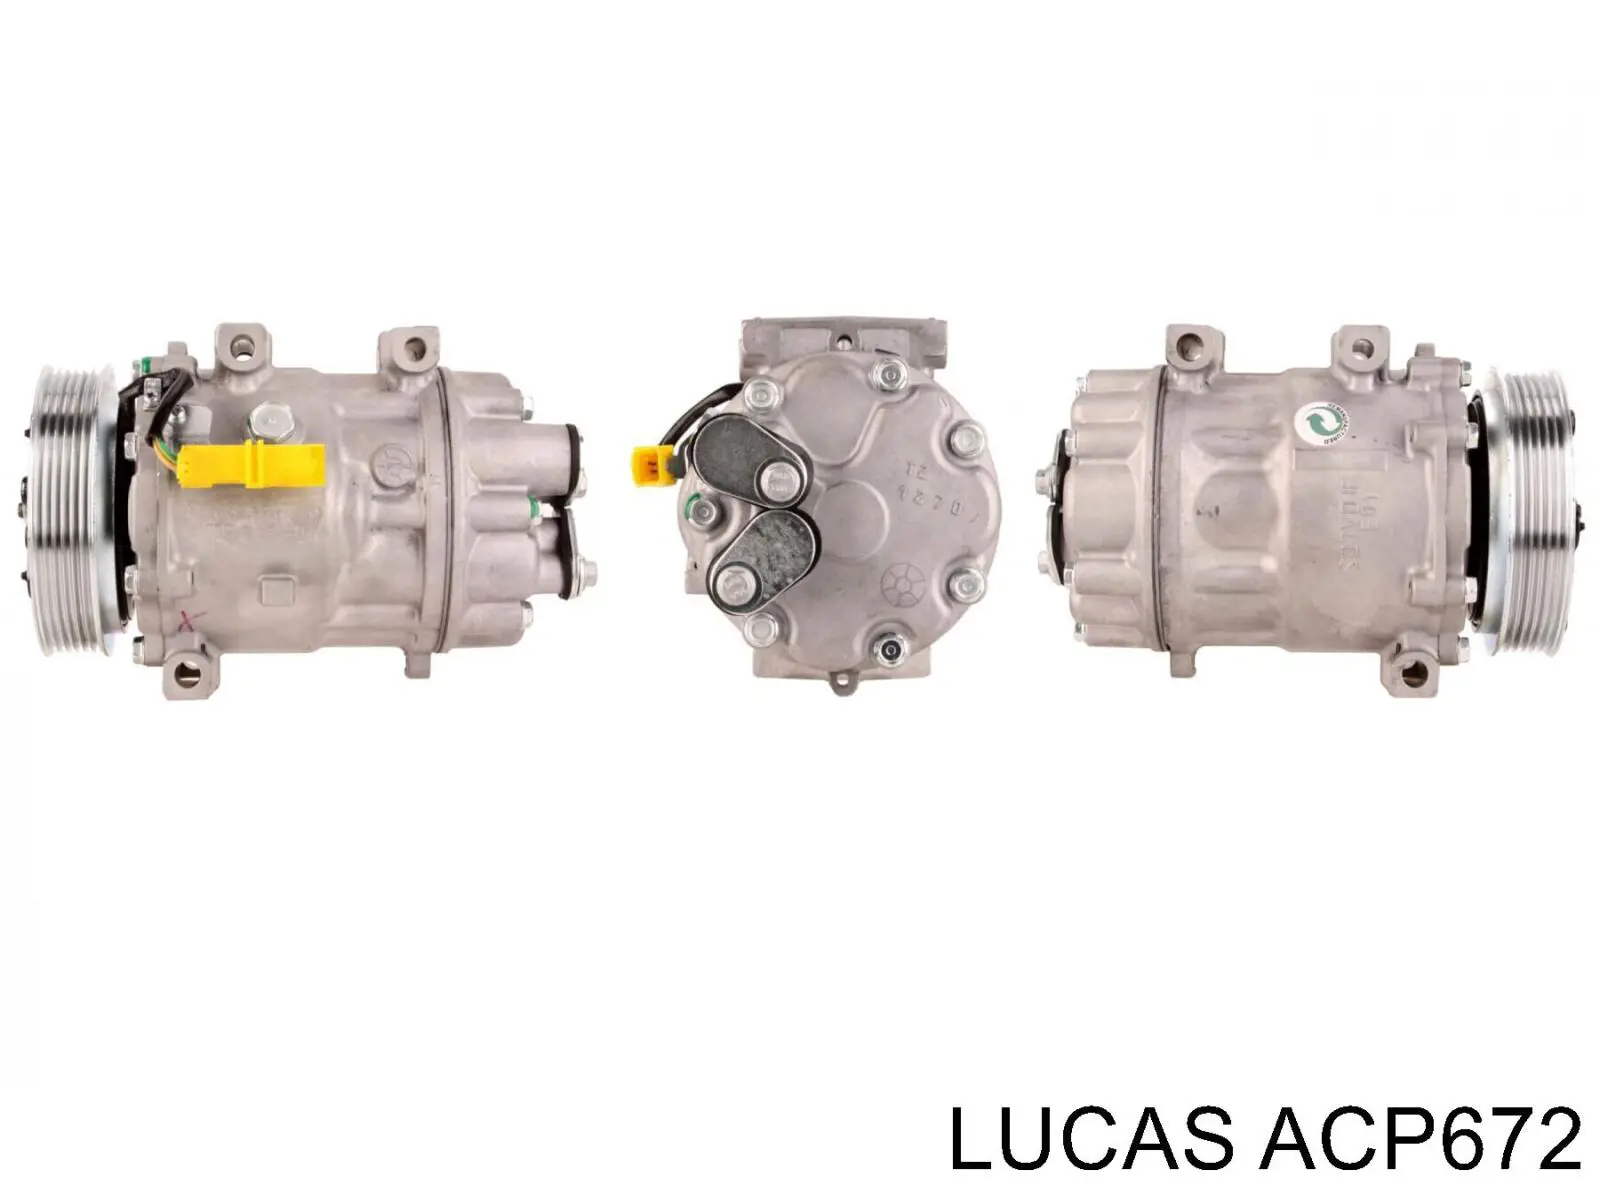 Compresor de aire acondicionado ACP672 Lucas